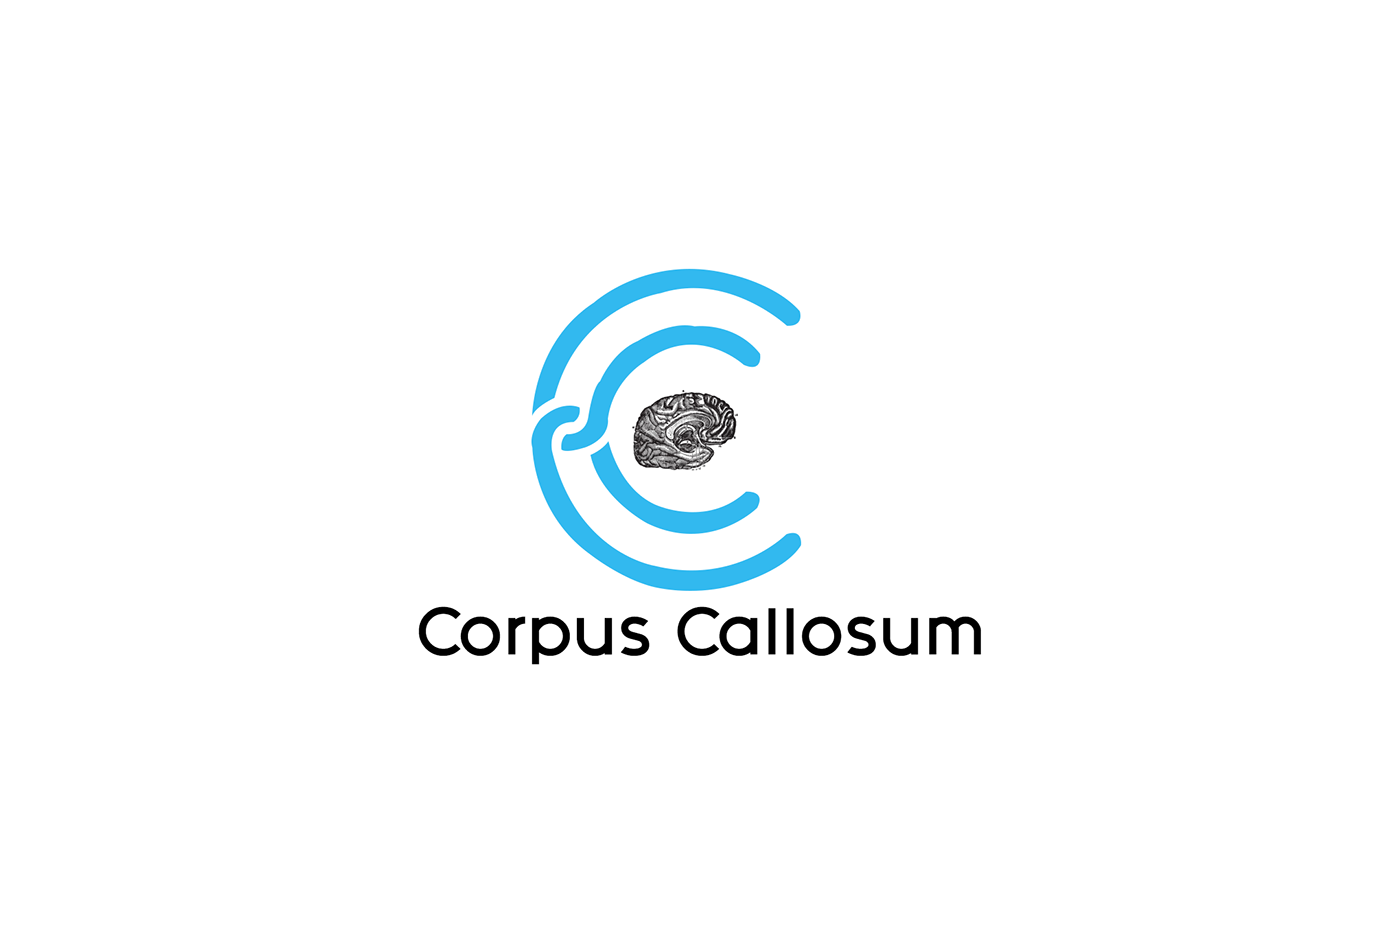 gary fernon Corpus Callosum community creative